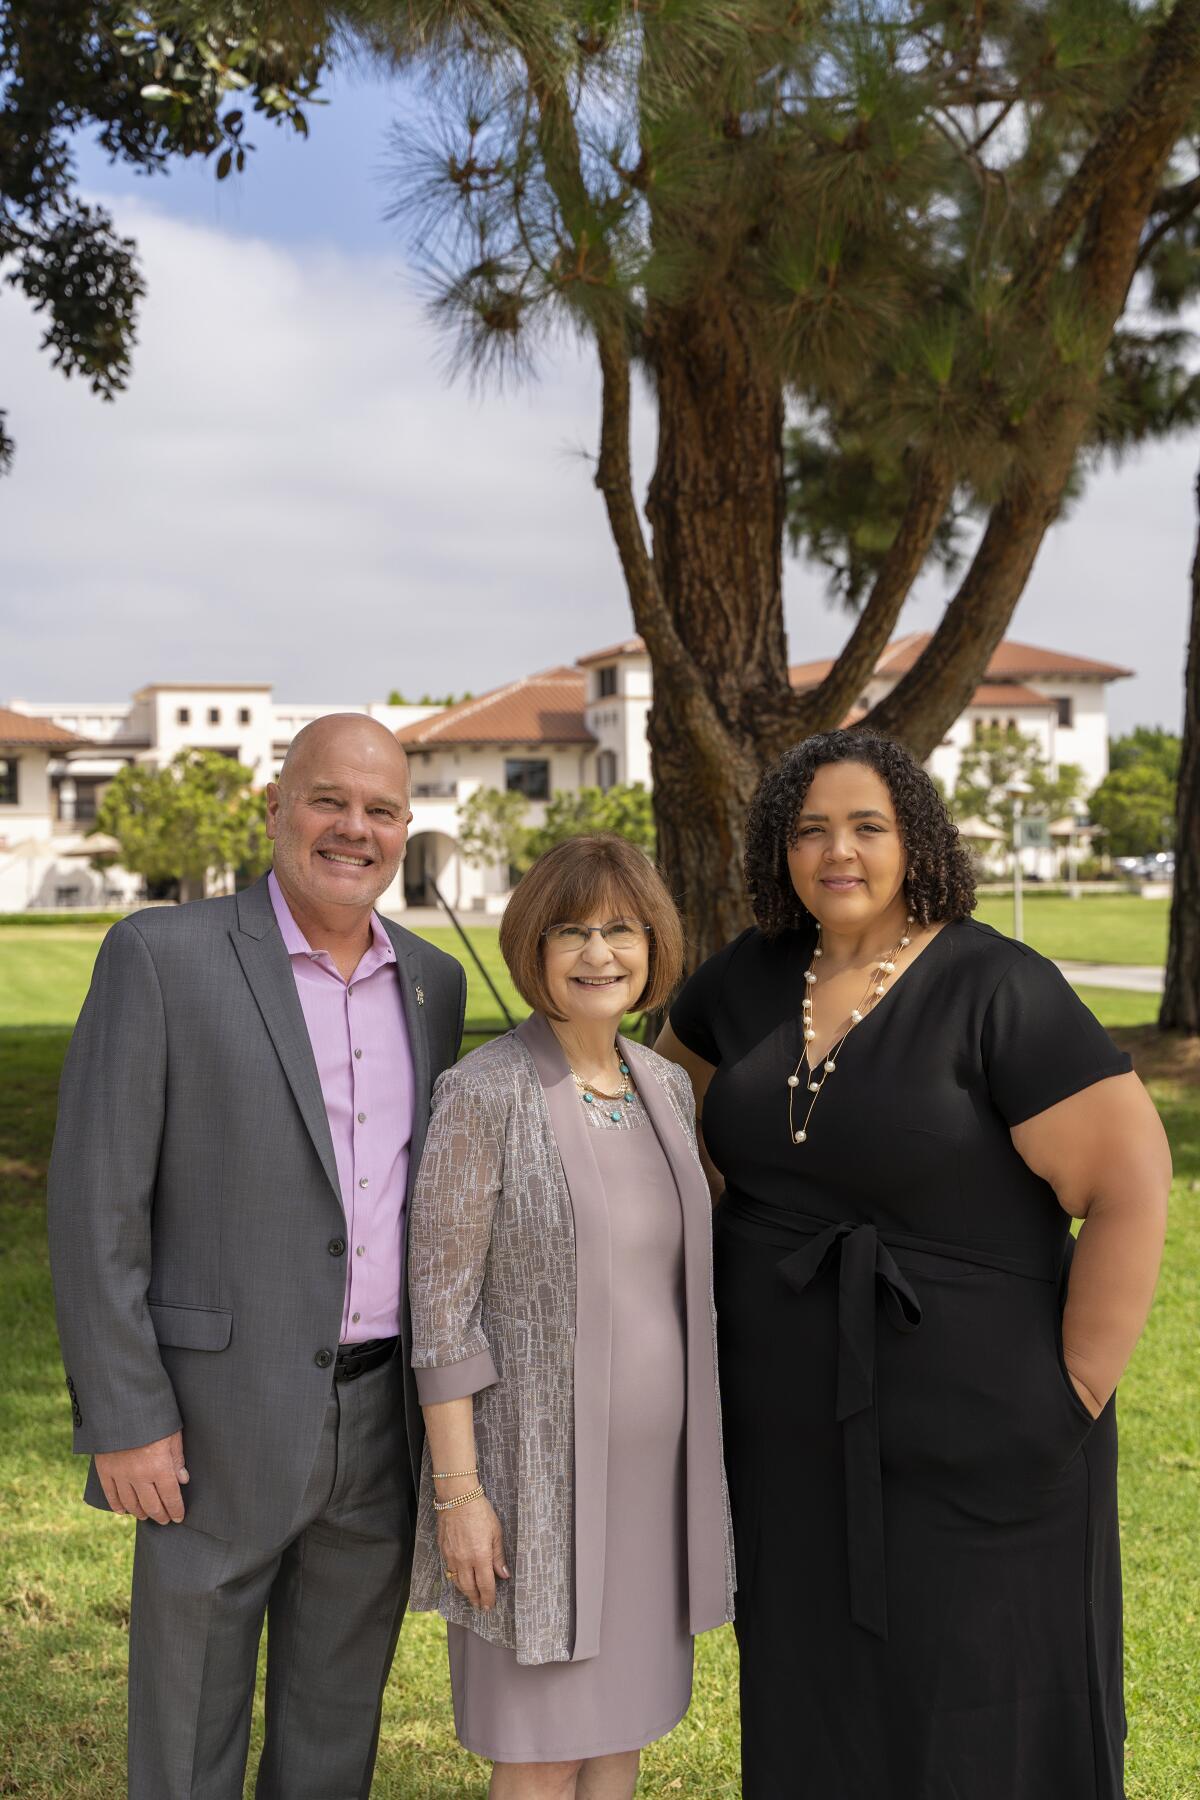 Chris Simonsen, Dr. Sandra Morgan and Dr. Shay Sorrells attend the Priceless Luncheon held at Vanguard University.